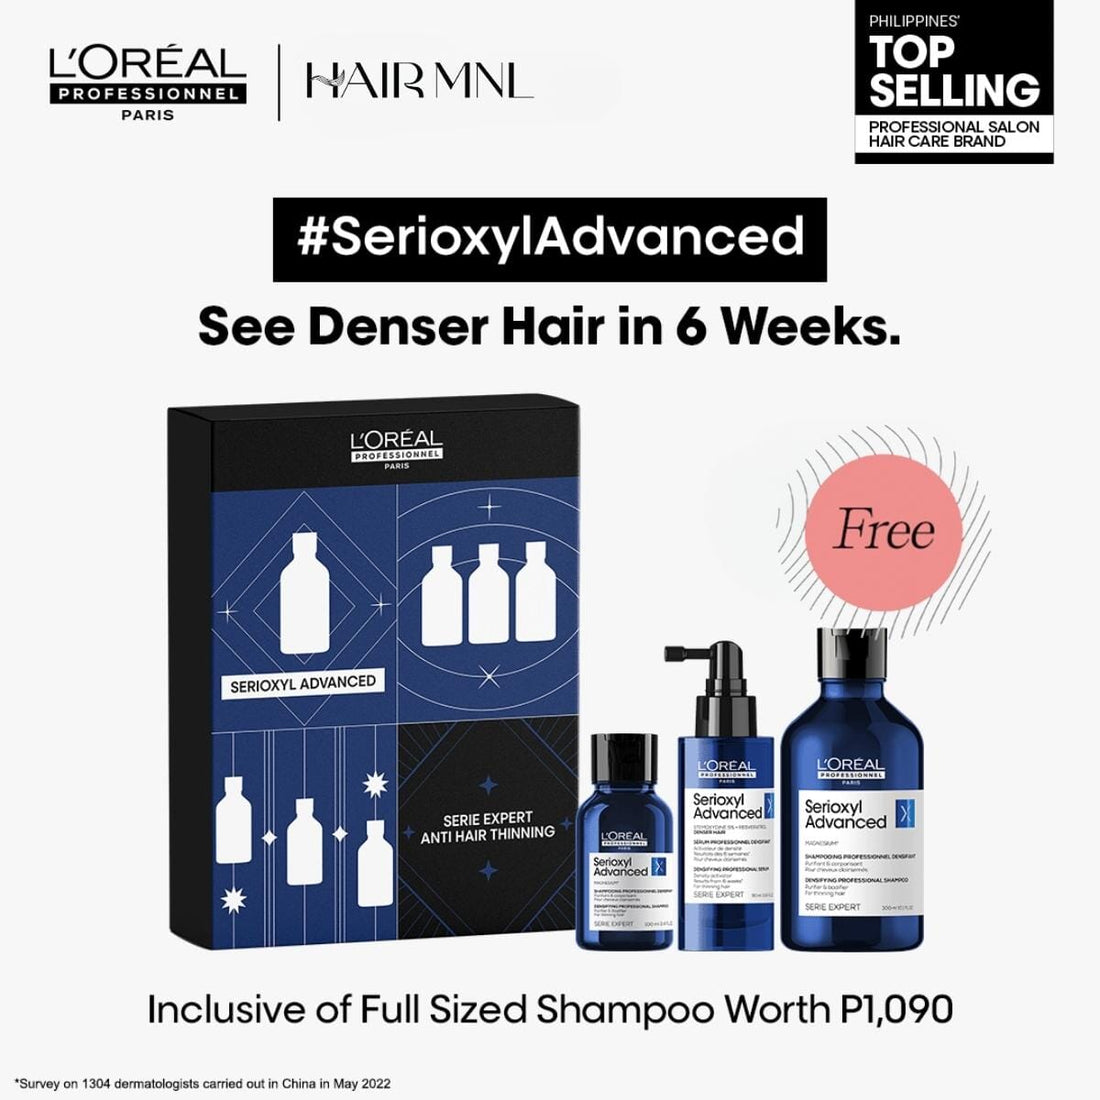 L'Oréal Professionnel Serioxyl Advanced Holiday Gift Set w/ FREE Full-Sized Shampoo - HairMNL